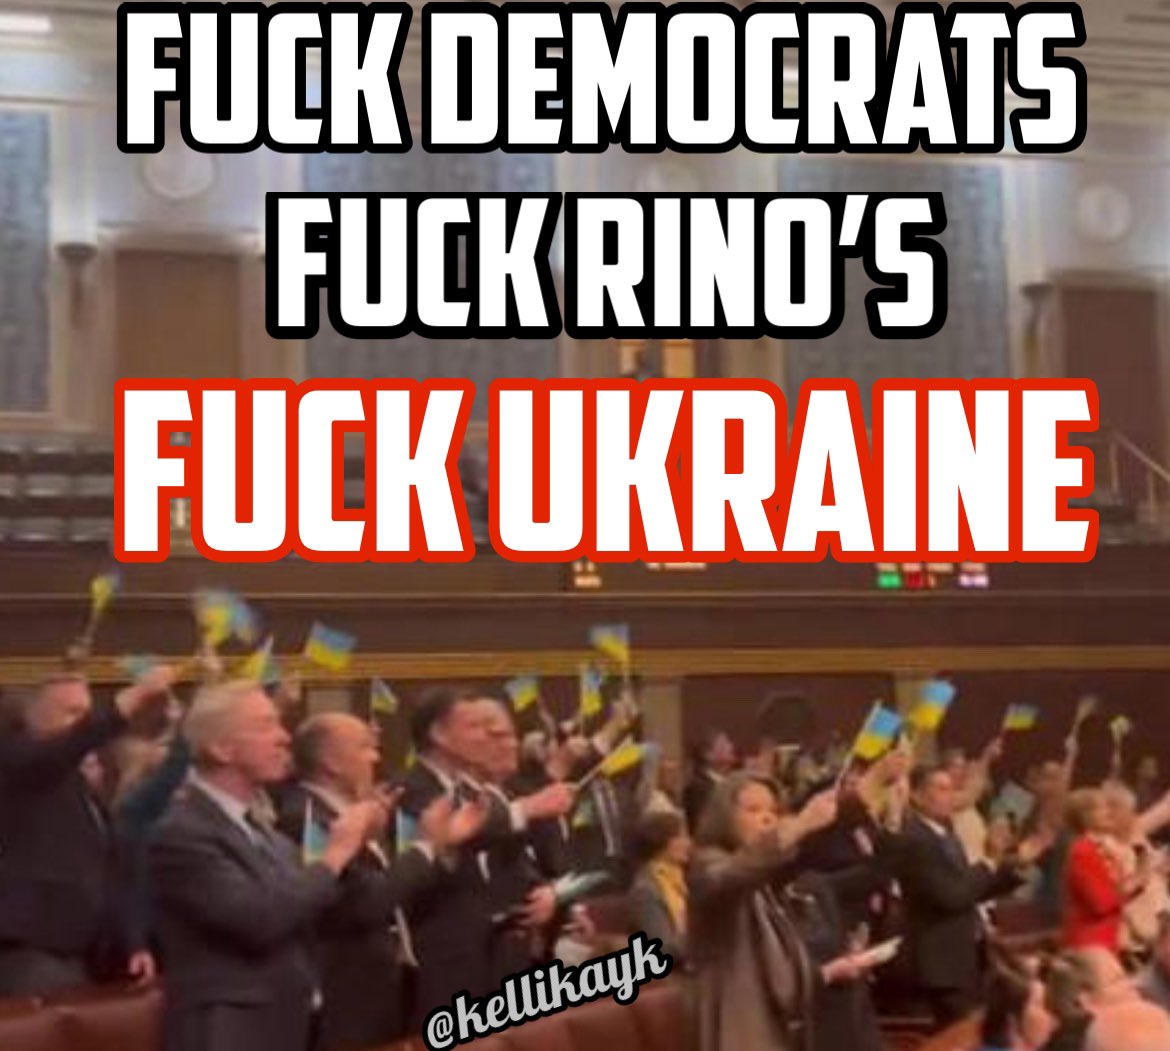 Fuck democrats 
Fuck RINO’s
Fuck the Ukrainian flag 
And FUCK UKRAINE 
🖕🖕🖕🖕🖕